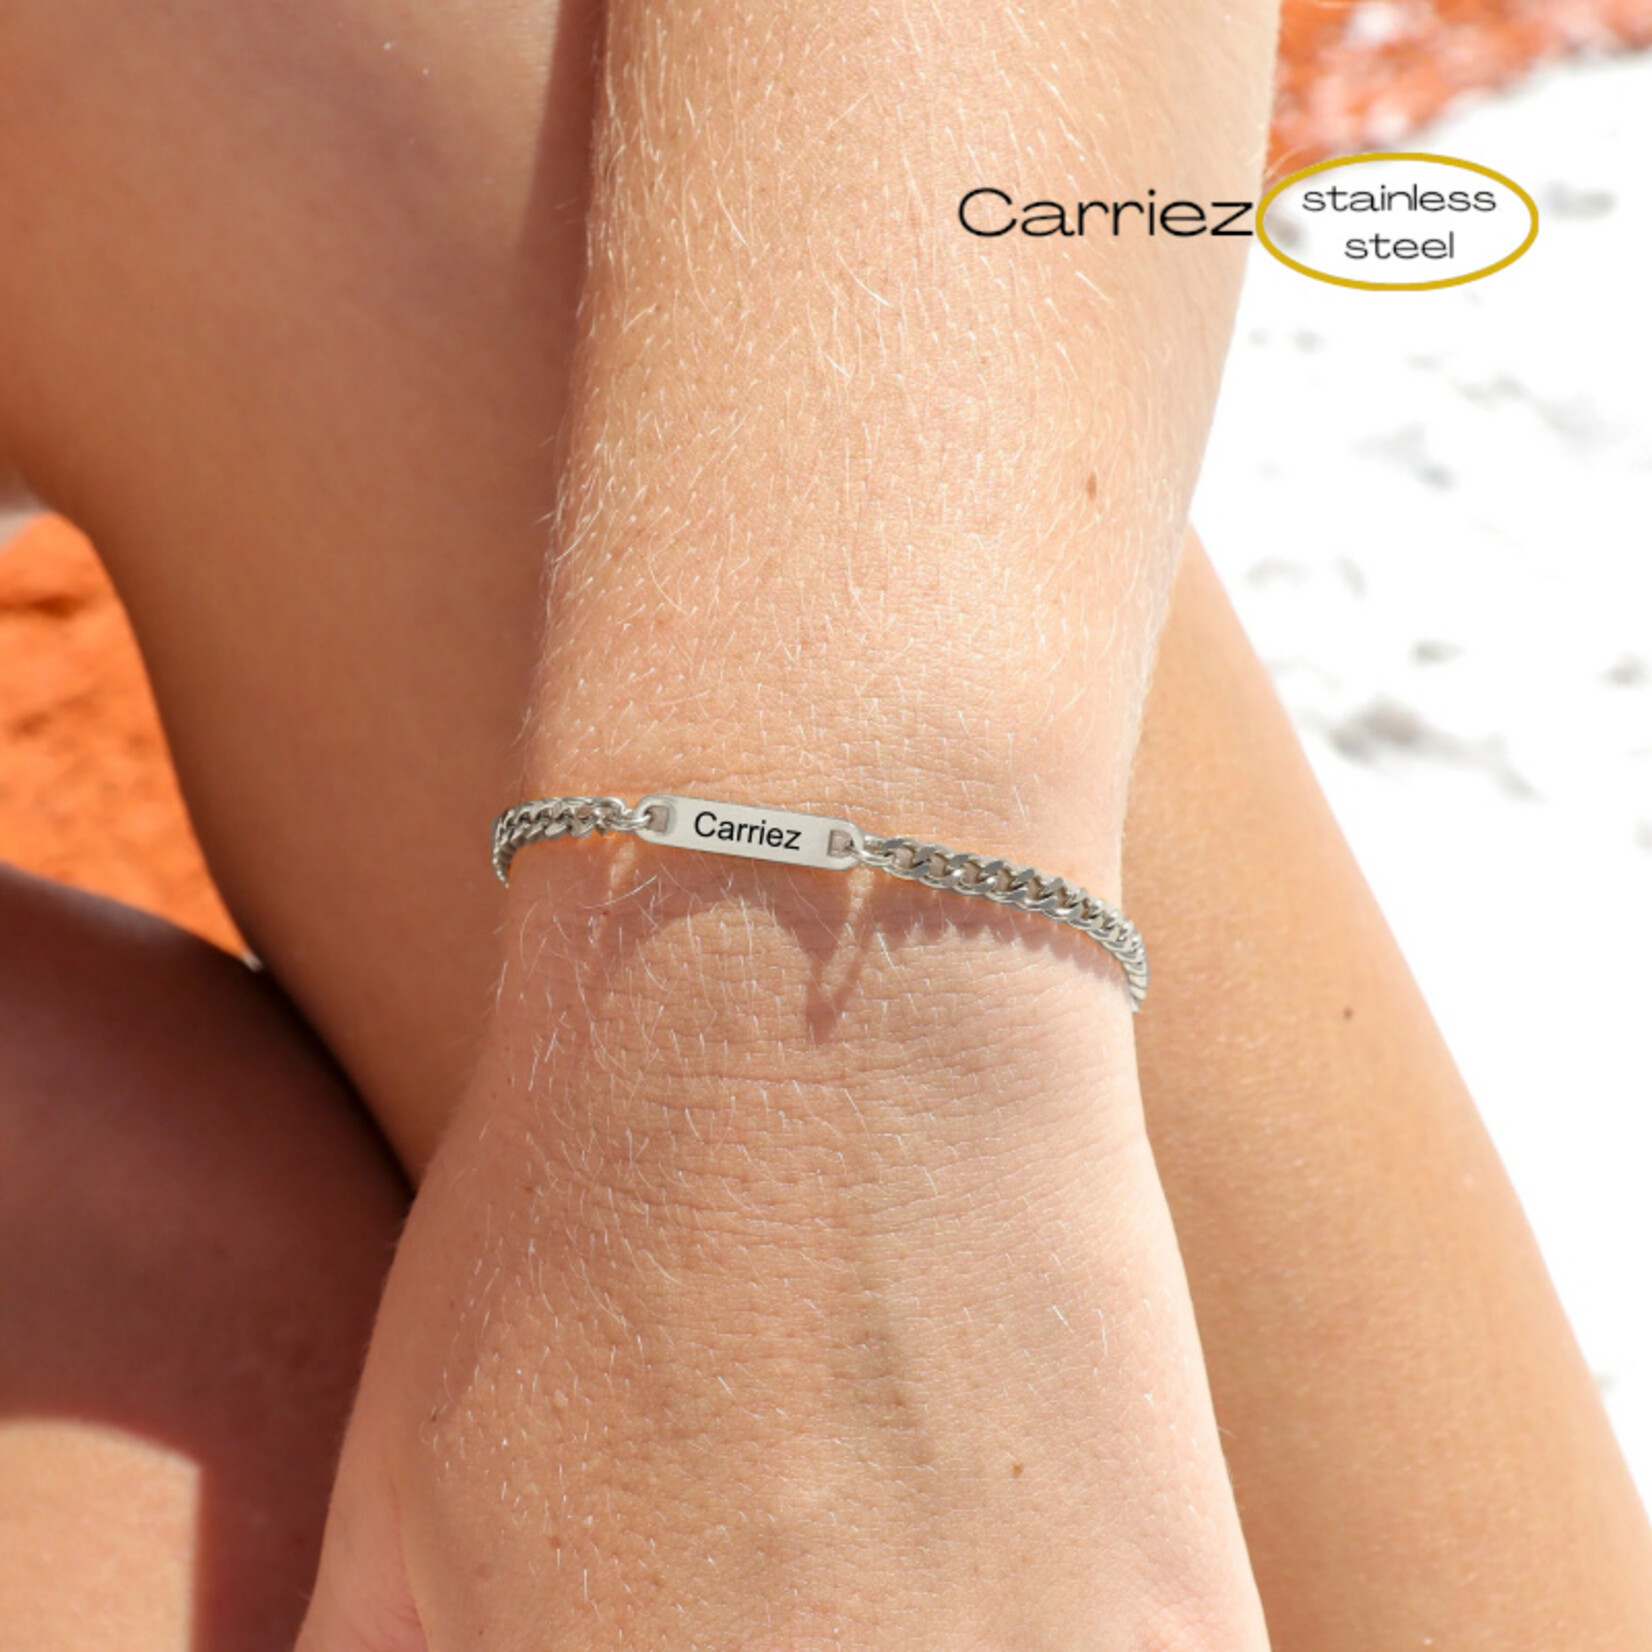 Carriez Gourmet naam armband zilver premium stainless steel